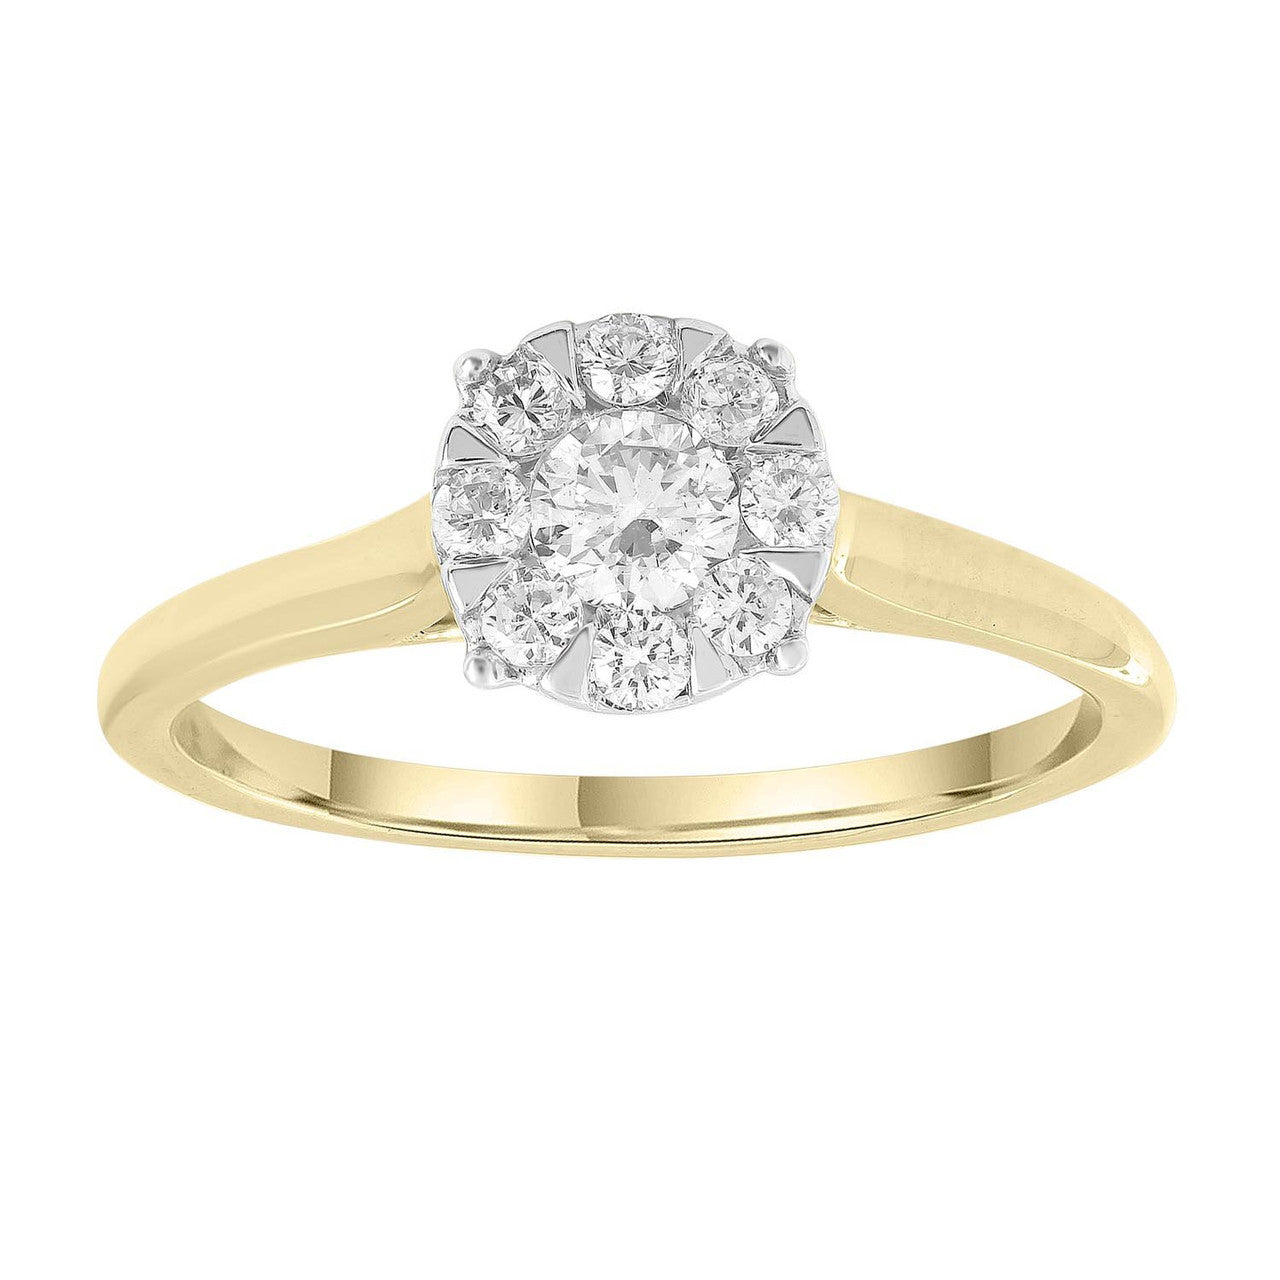 Ice Jewellery Ring with 0.40ct Diamonds in 9K Yellow Gold -  R-36834-040-Y | Ice Jewellery Australia